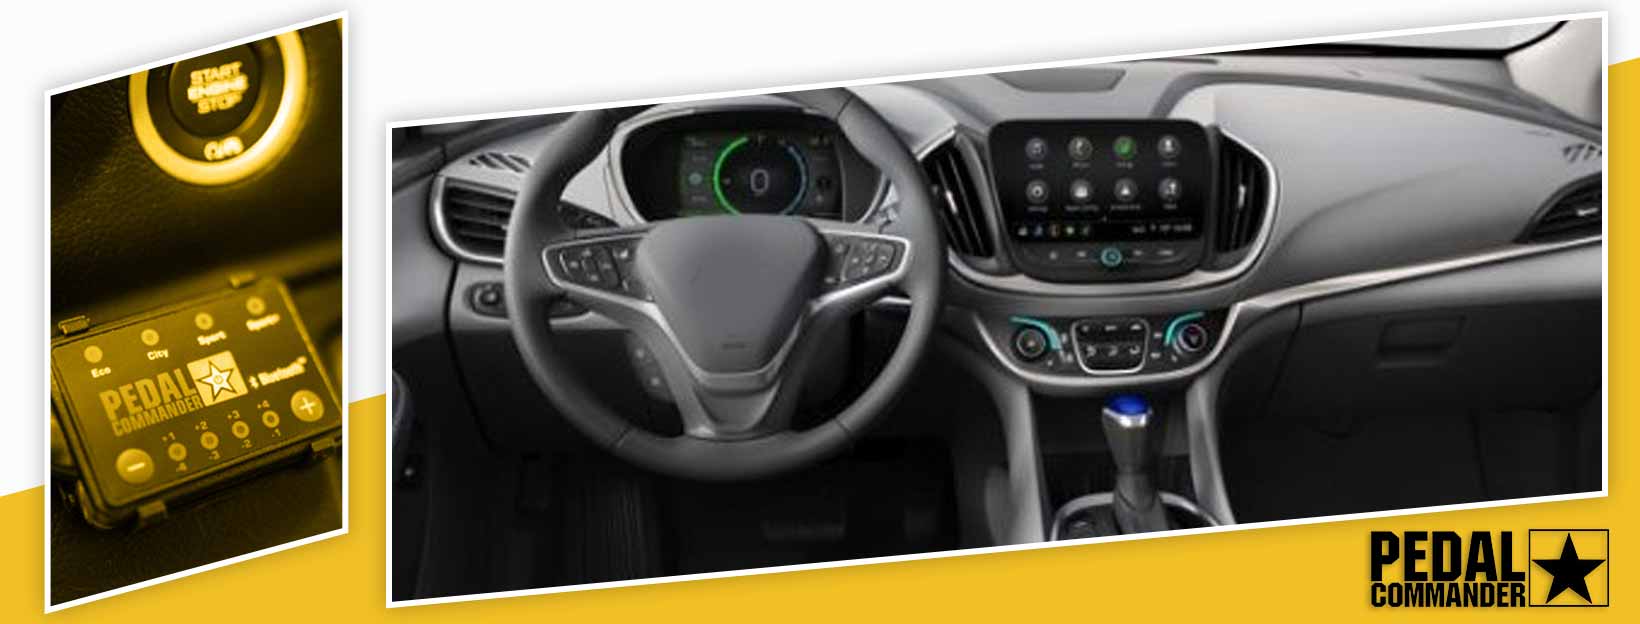 Pedal Commander for Chevrolet Volt - interior